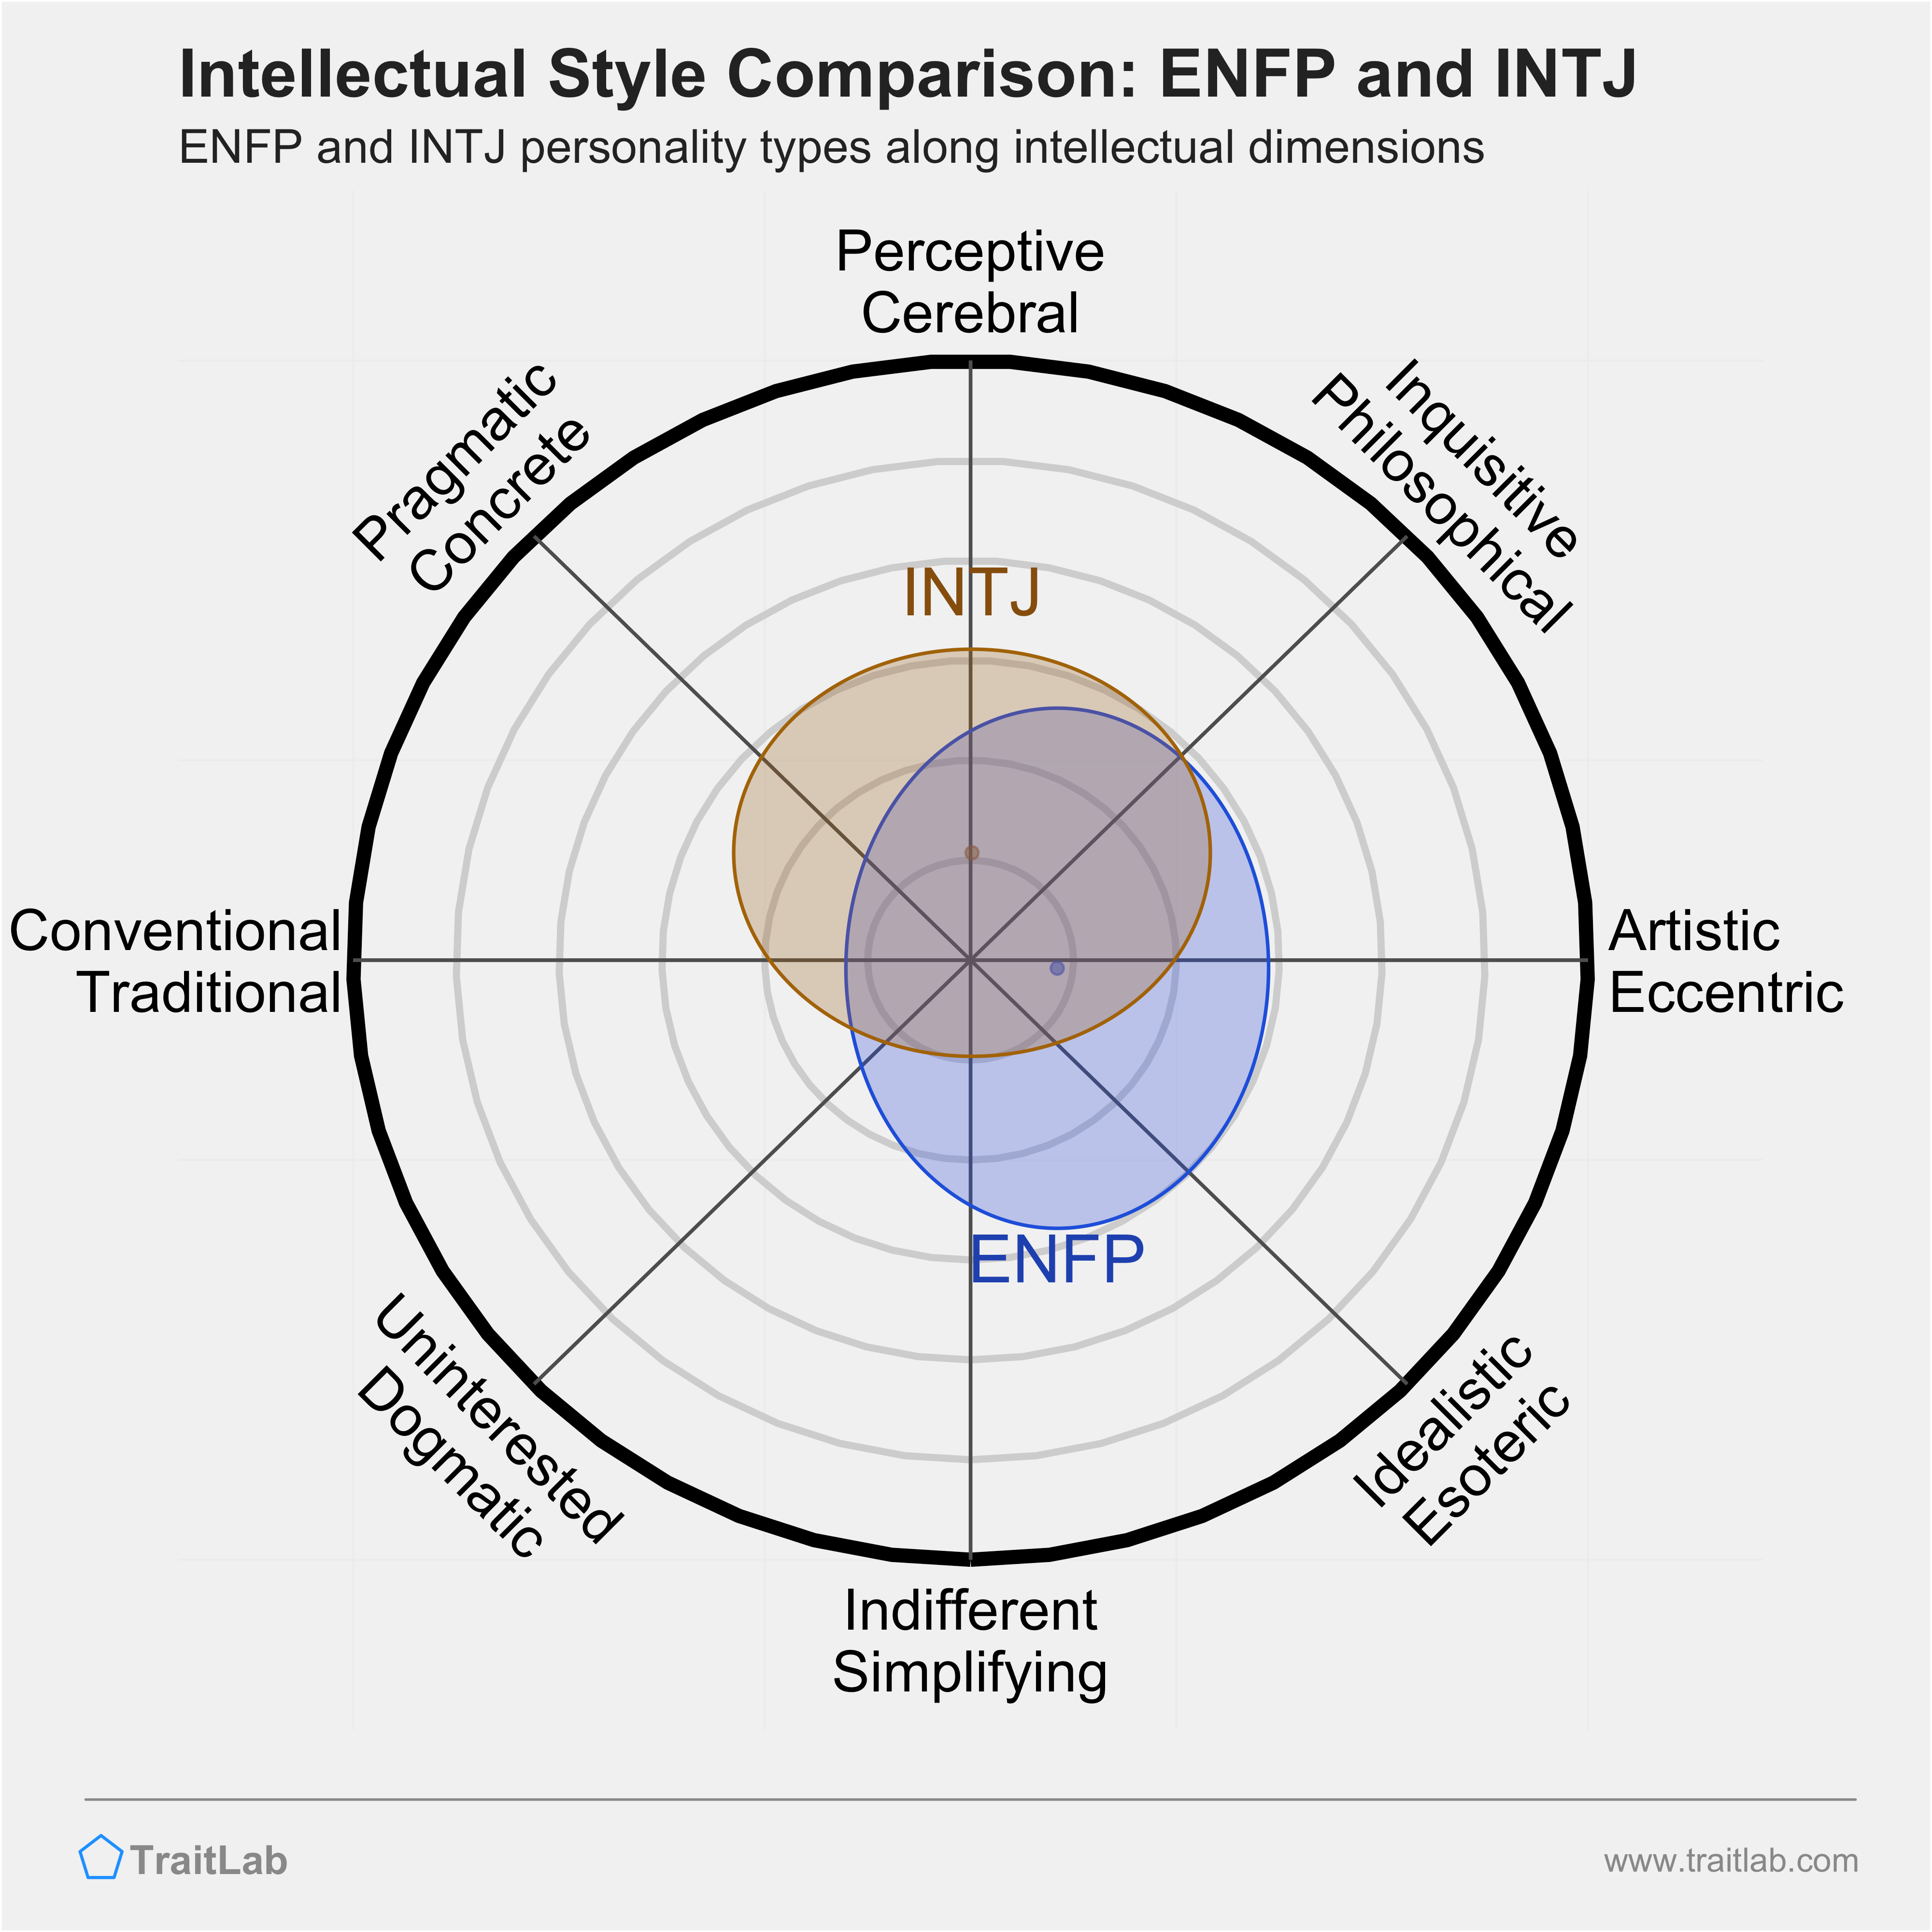 ENFP and INTJ comparison across intellectual dimensions